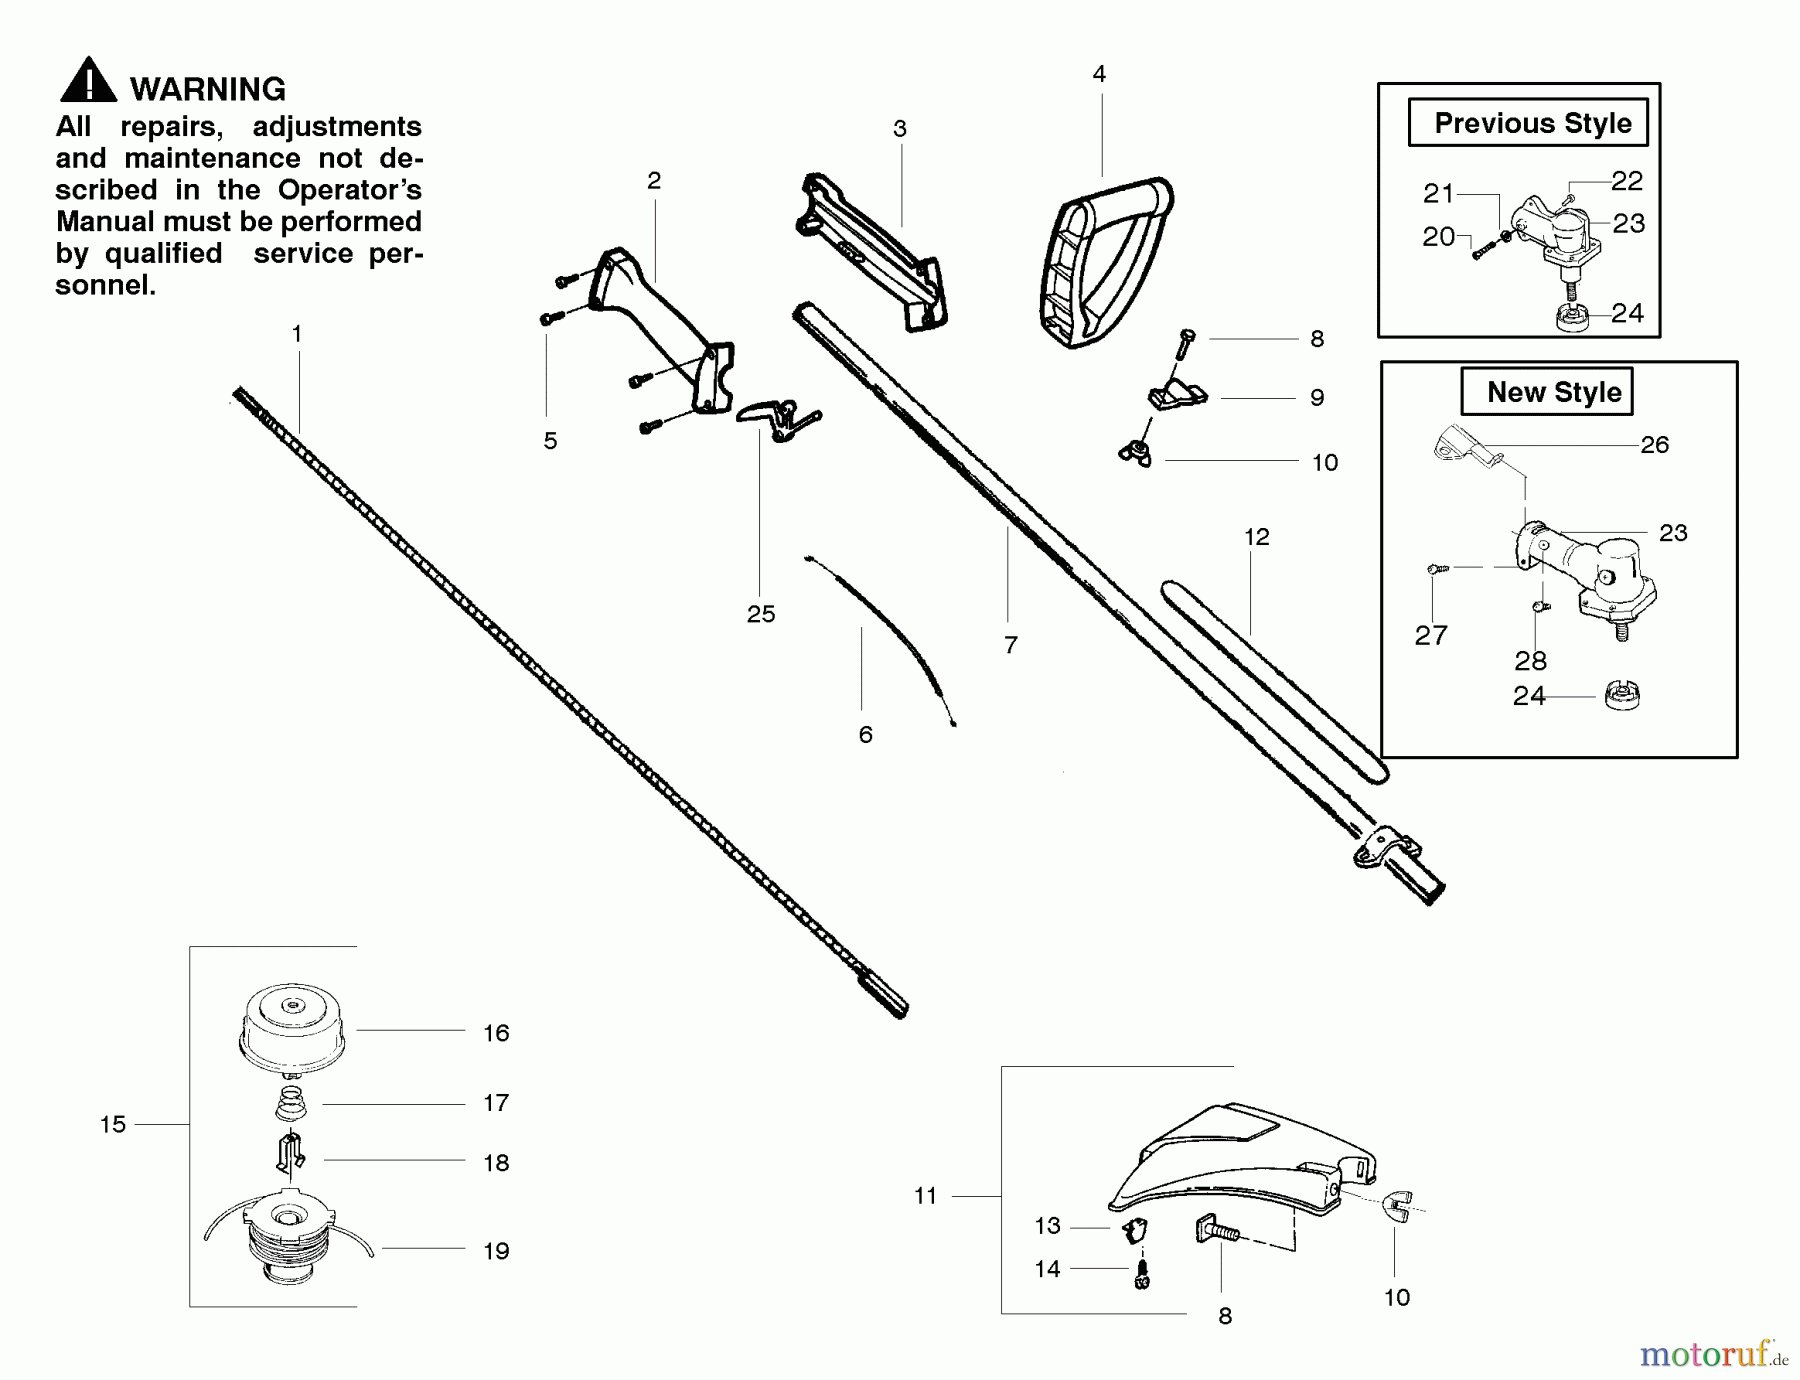  Poulan / Weed Eater Motorsensen, Trimmer XT600 (Type 5) - Weed Eater String Trimmer Handle & Shaft Assembly